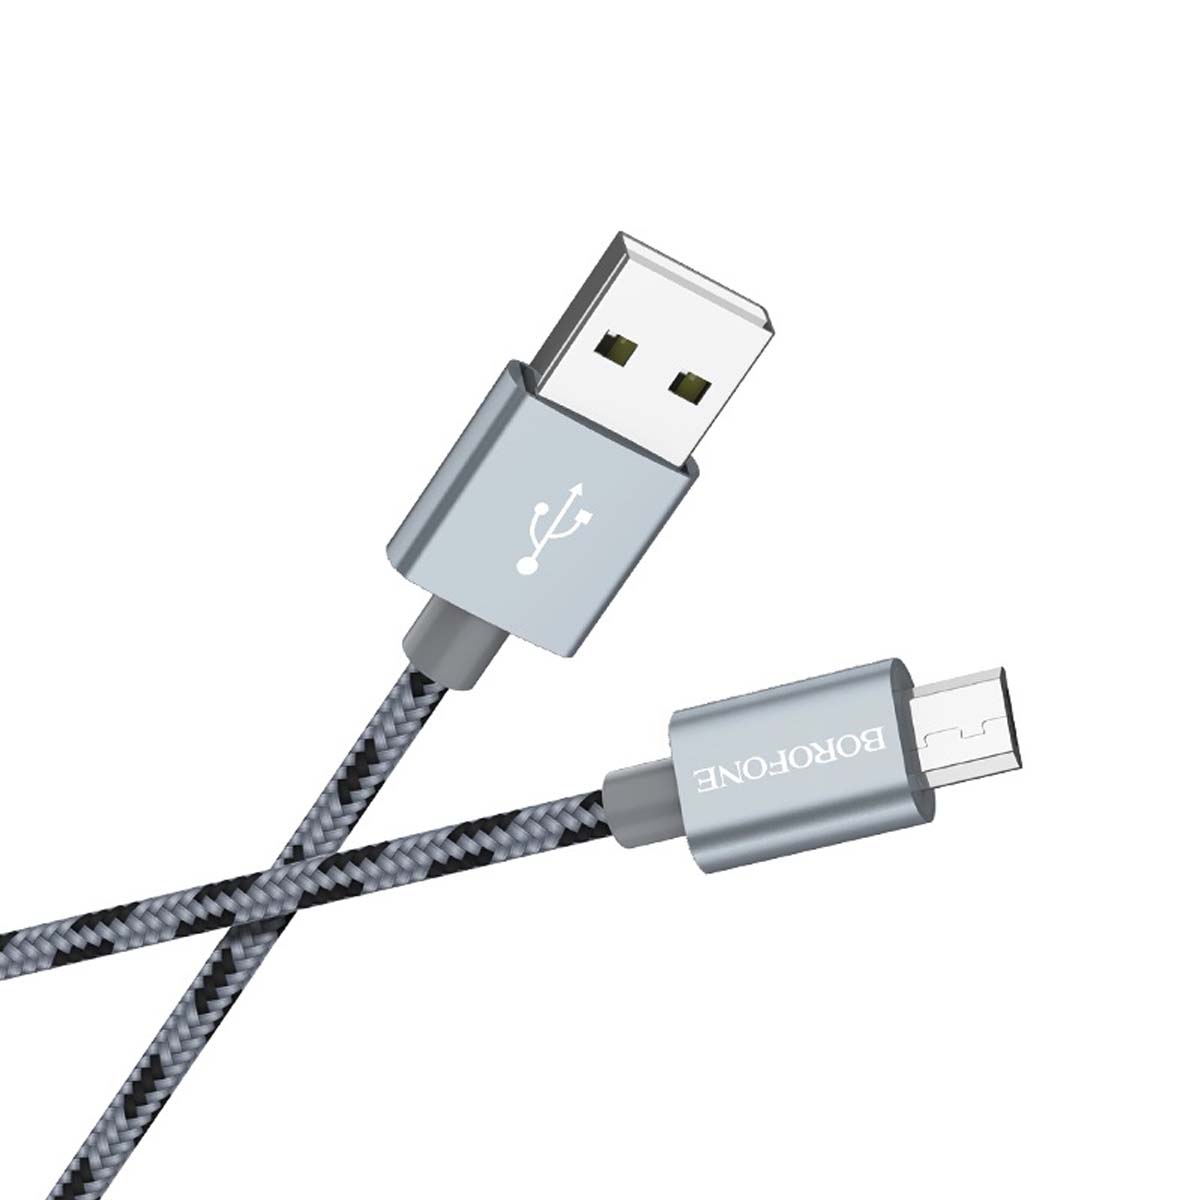 Кабель BOROFONE BX24 Ring current Micro USB, 2.4A, длина 1 метр, нейлоновая оплетка, цвет серый